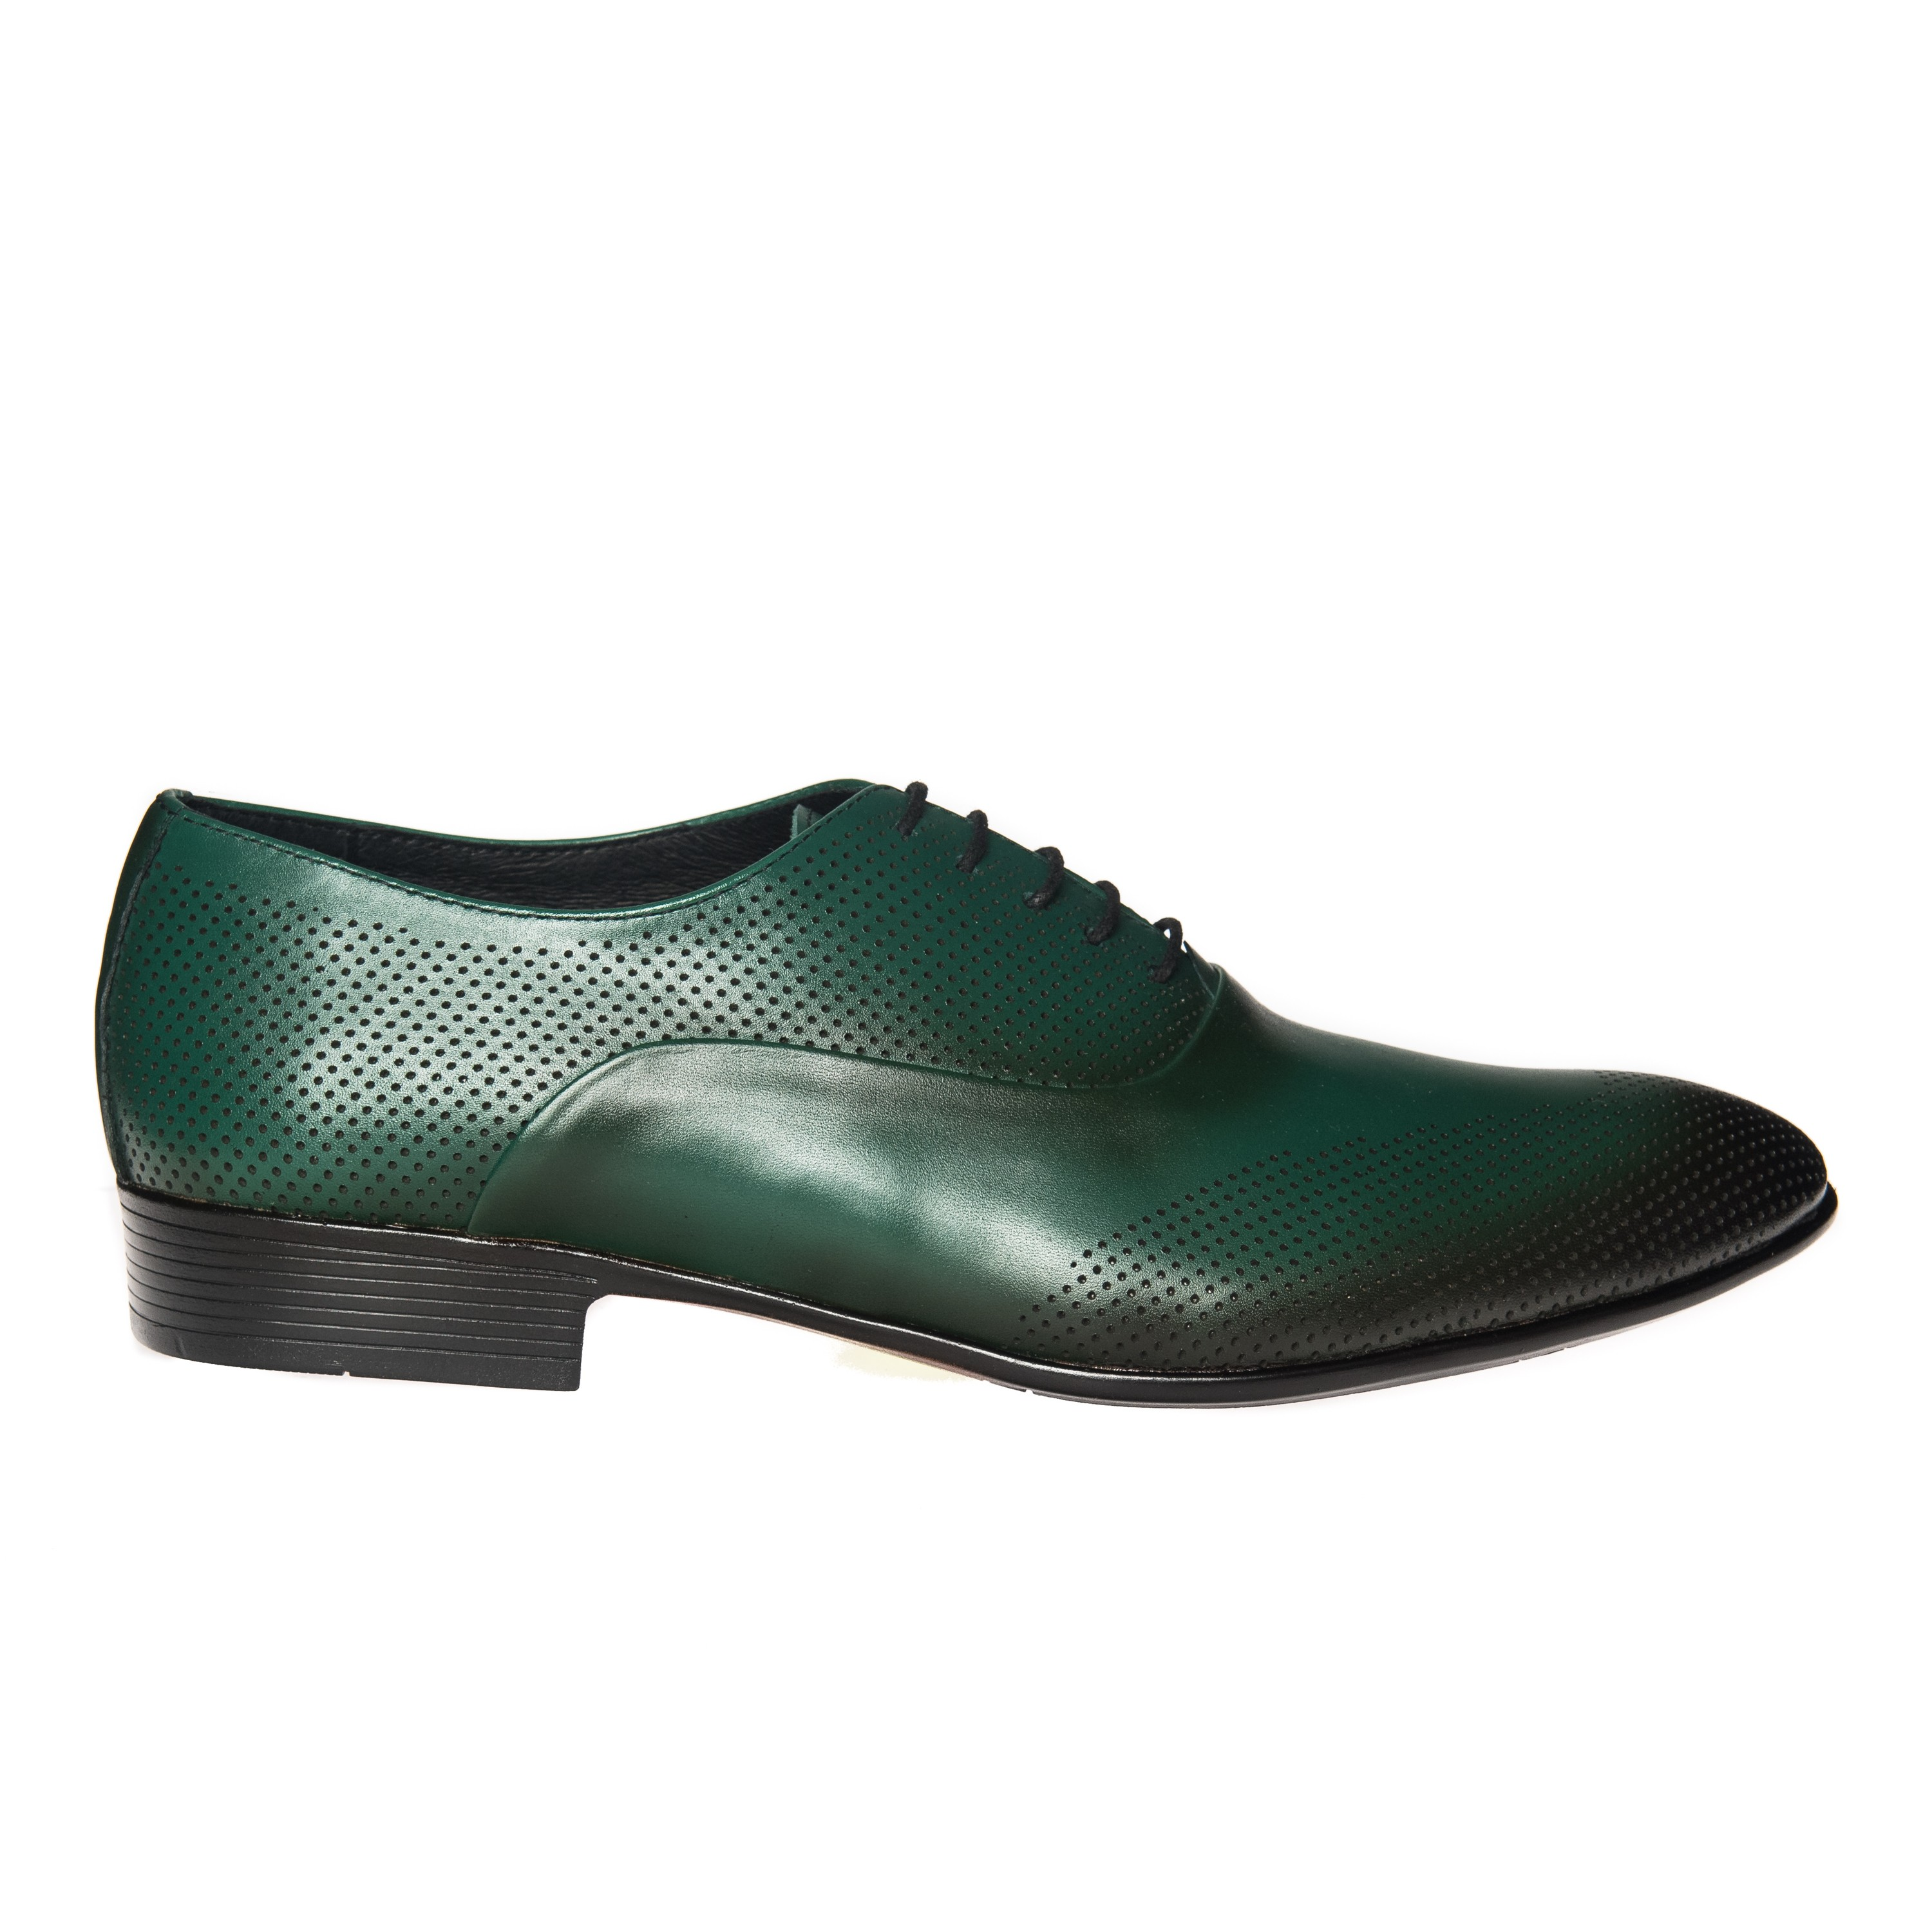 Pantofi barbati din piele naturala - Verde Perie - S 401 VP